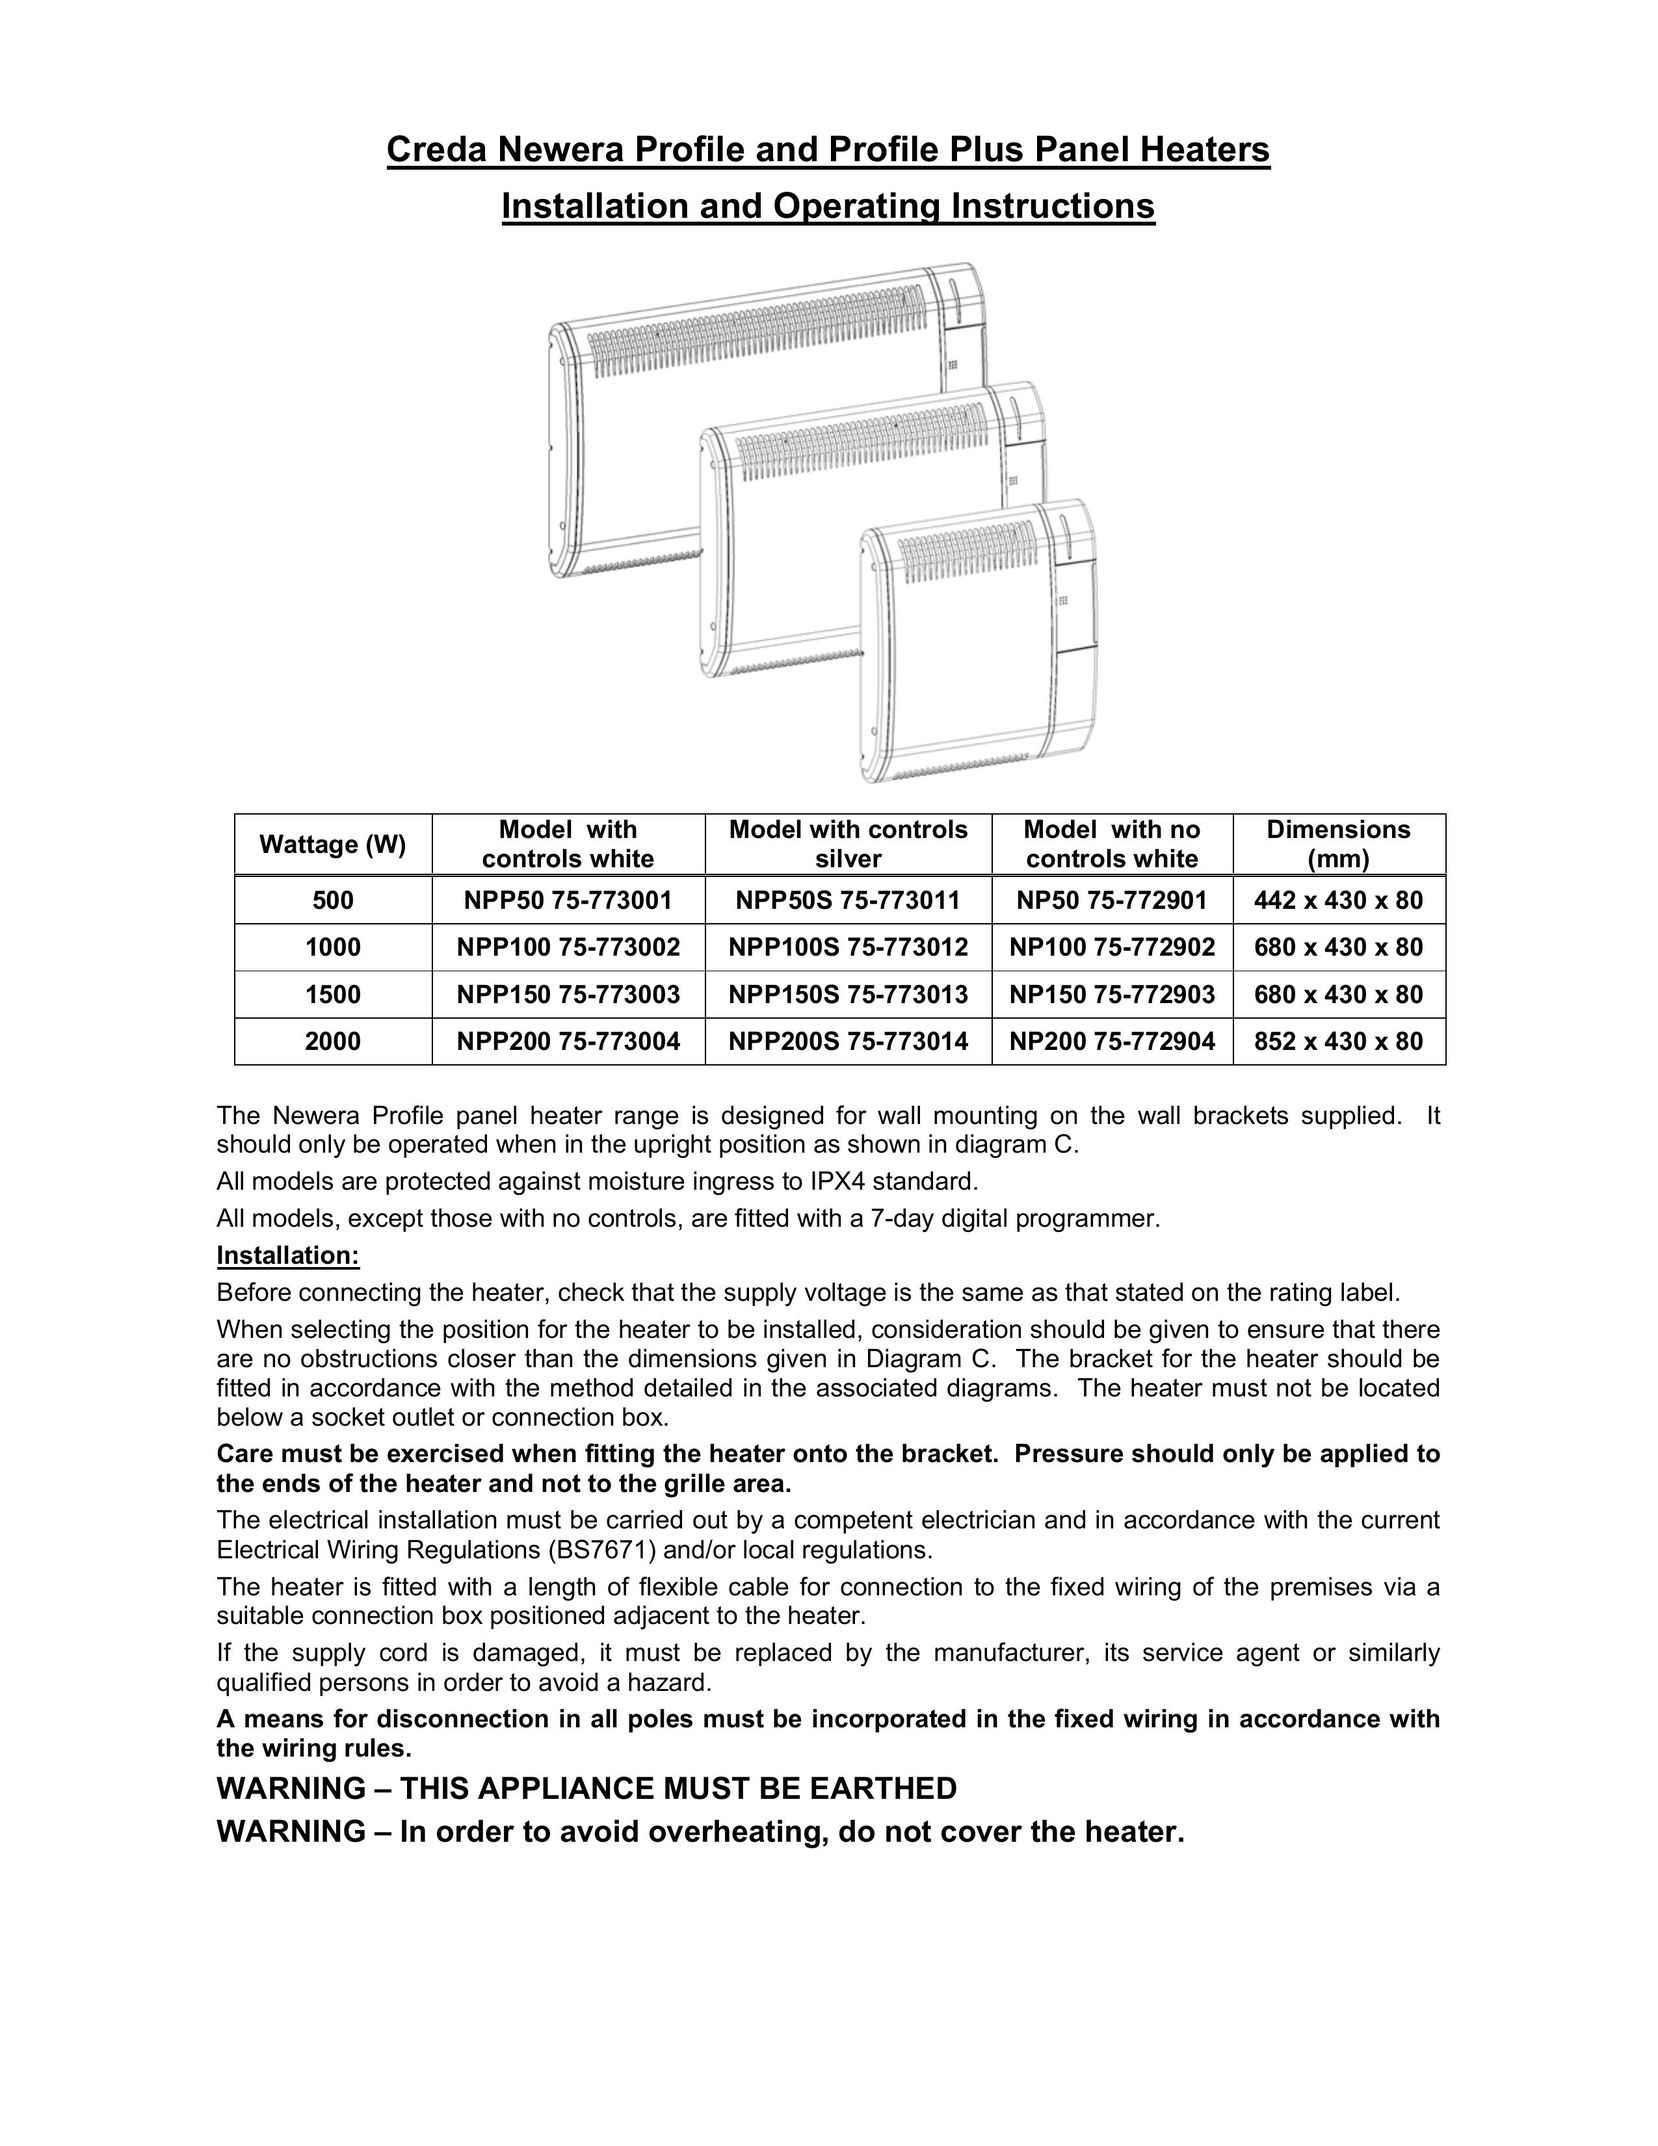 Creda NPP50S 75-773011 Air Conditioner User Manual